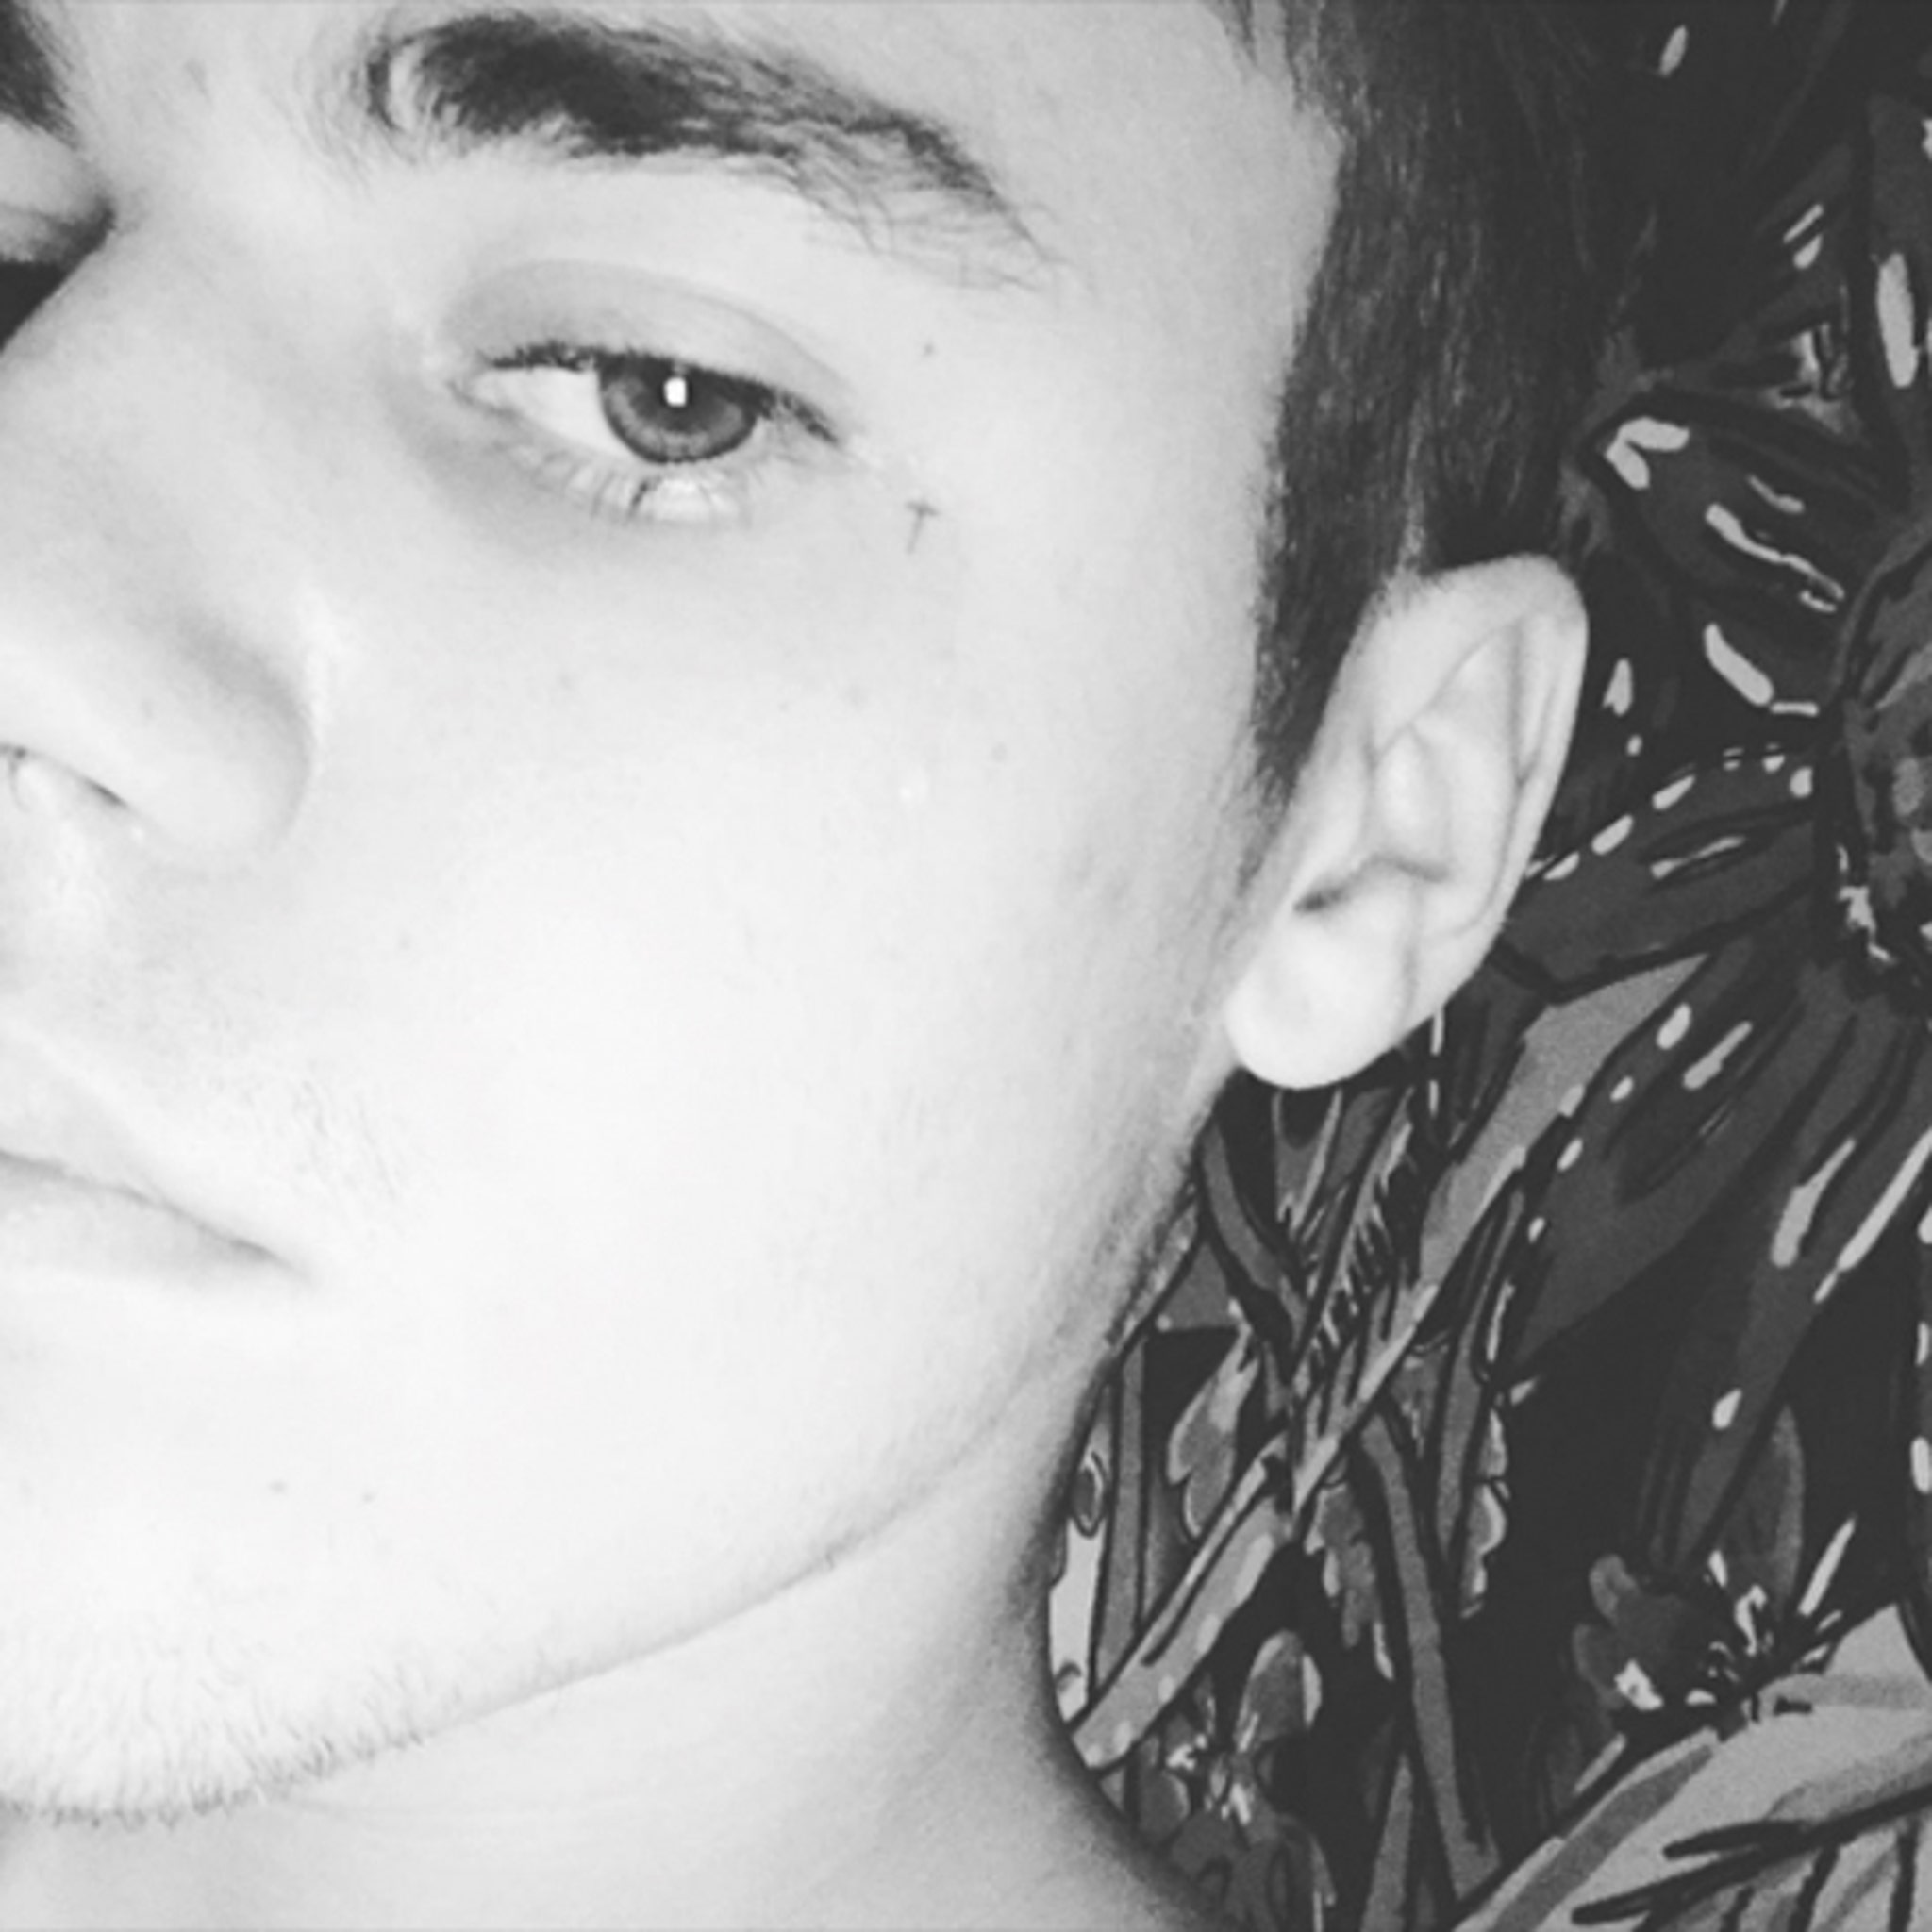 Justin Bieber Flaunts Cross Tattoo Near His Eye